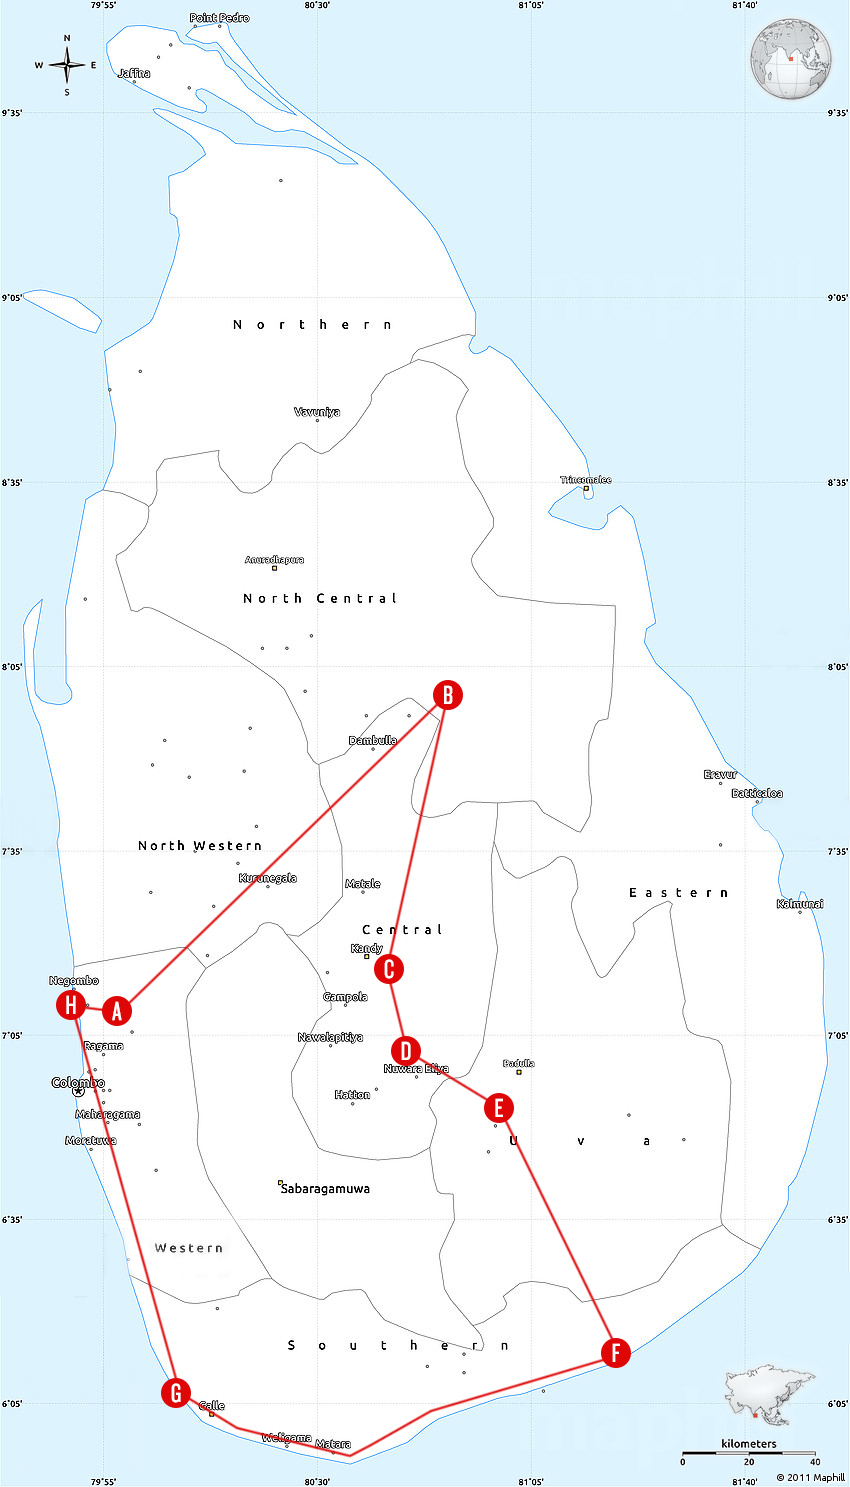 Sri Lanka - Our Map